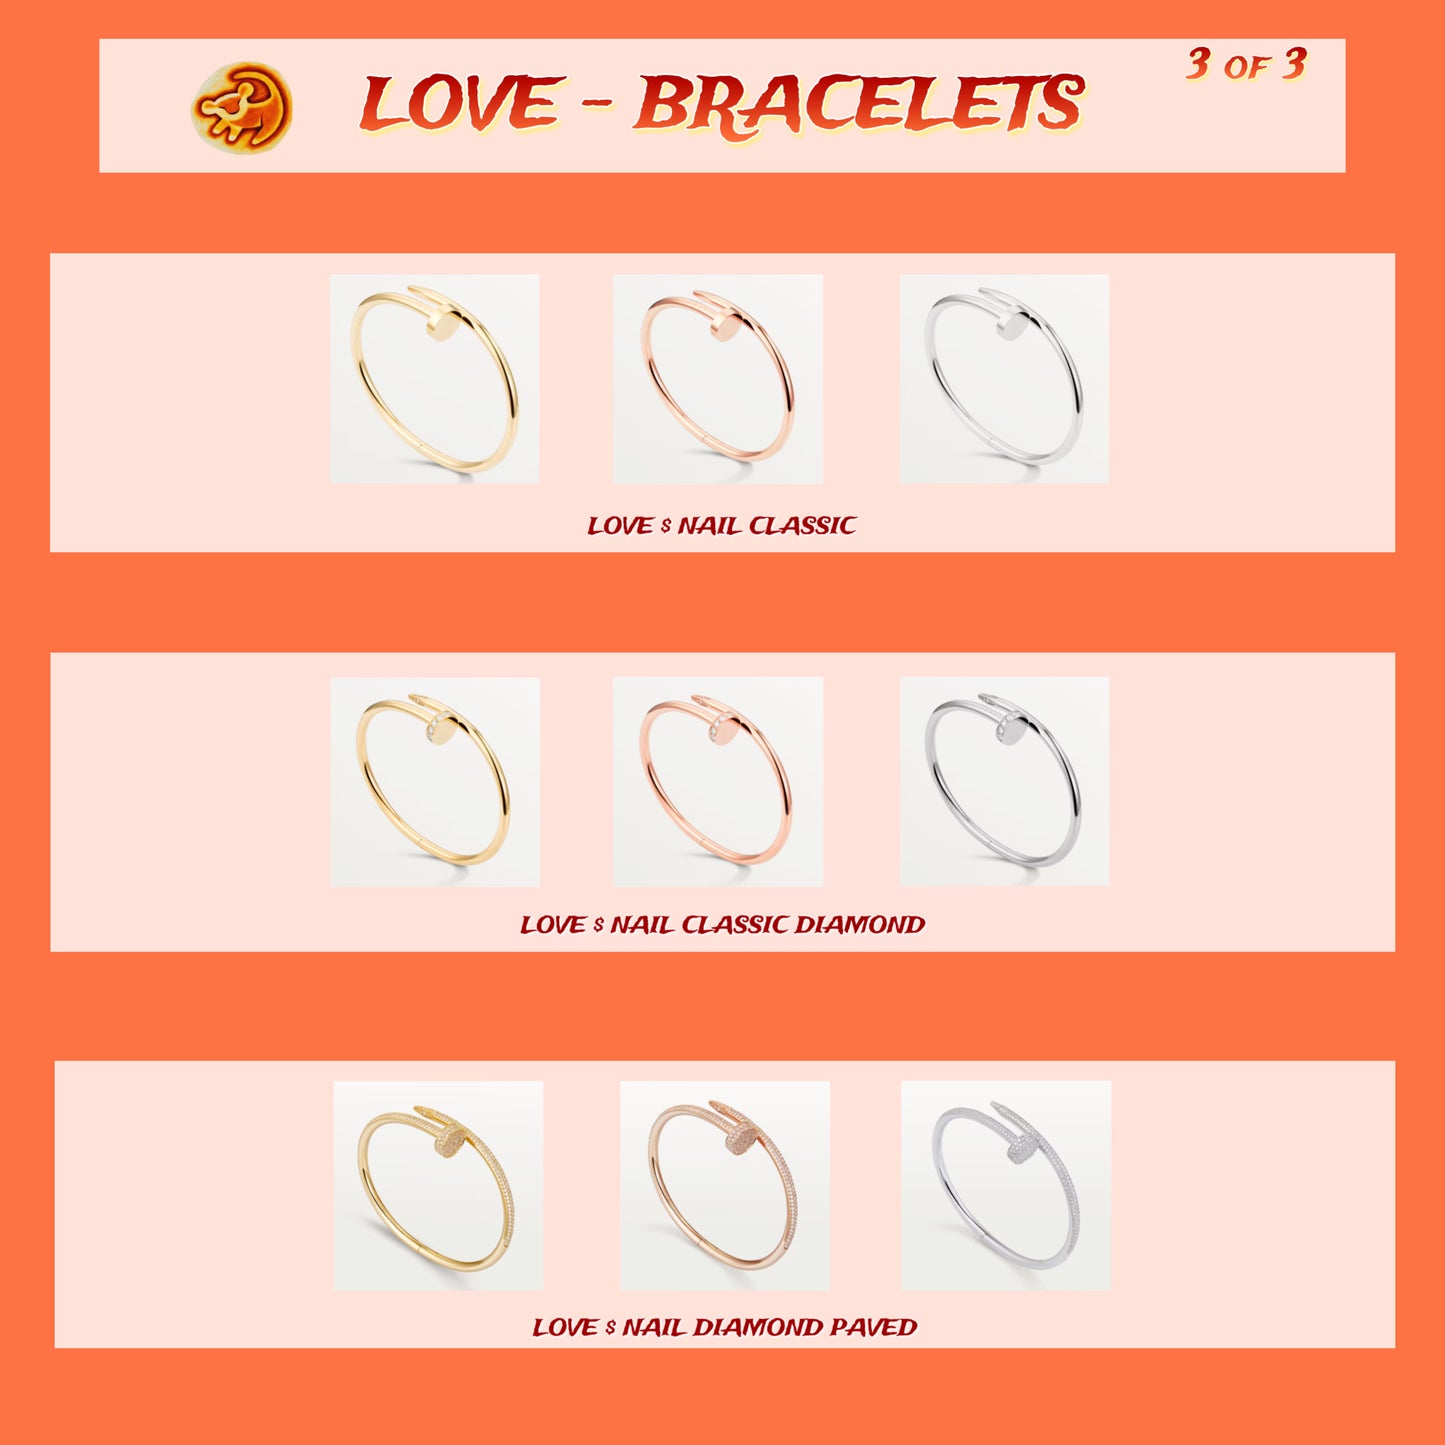 Stock - Love Bracelets 3 of 3